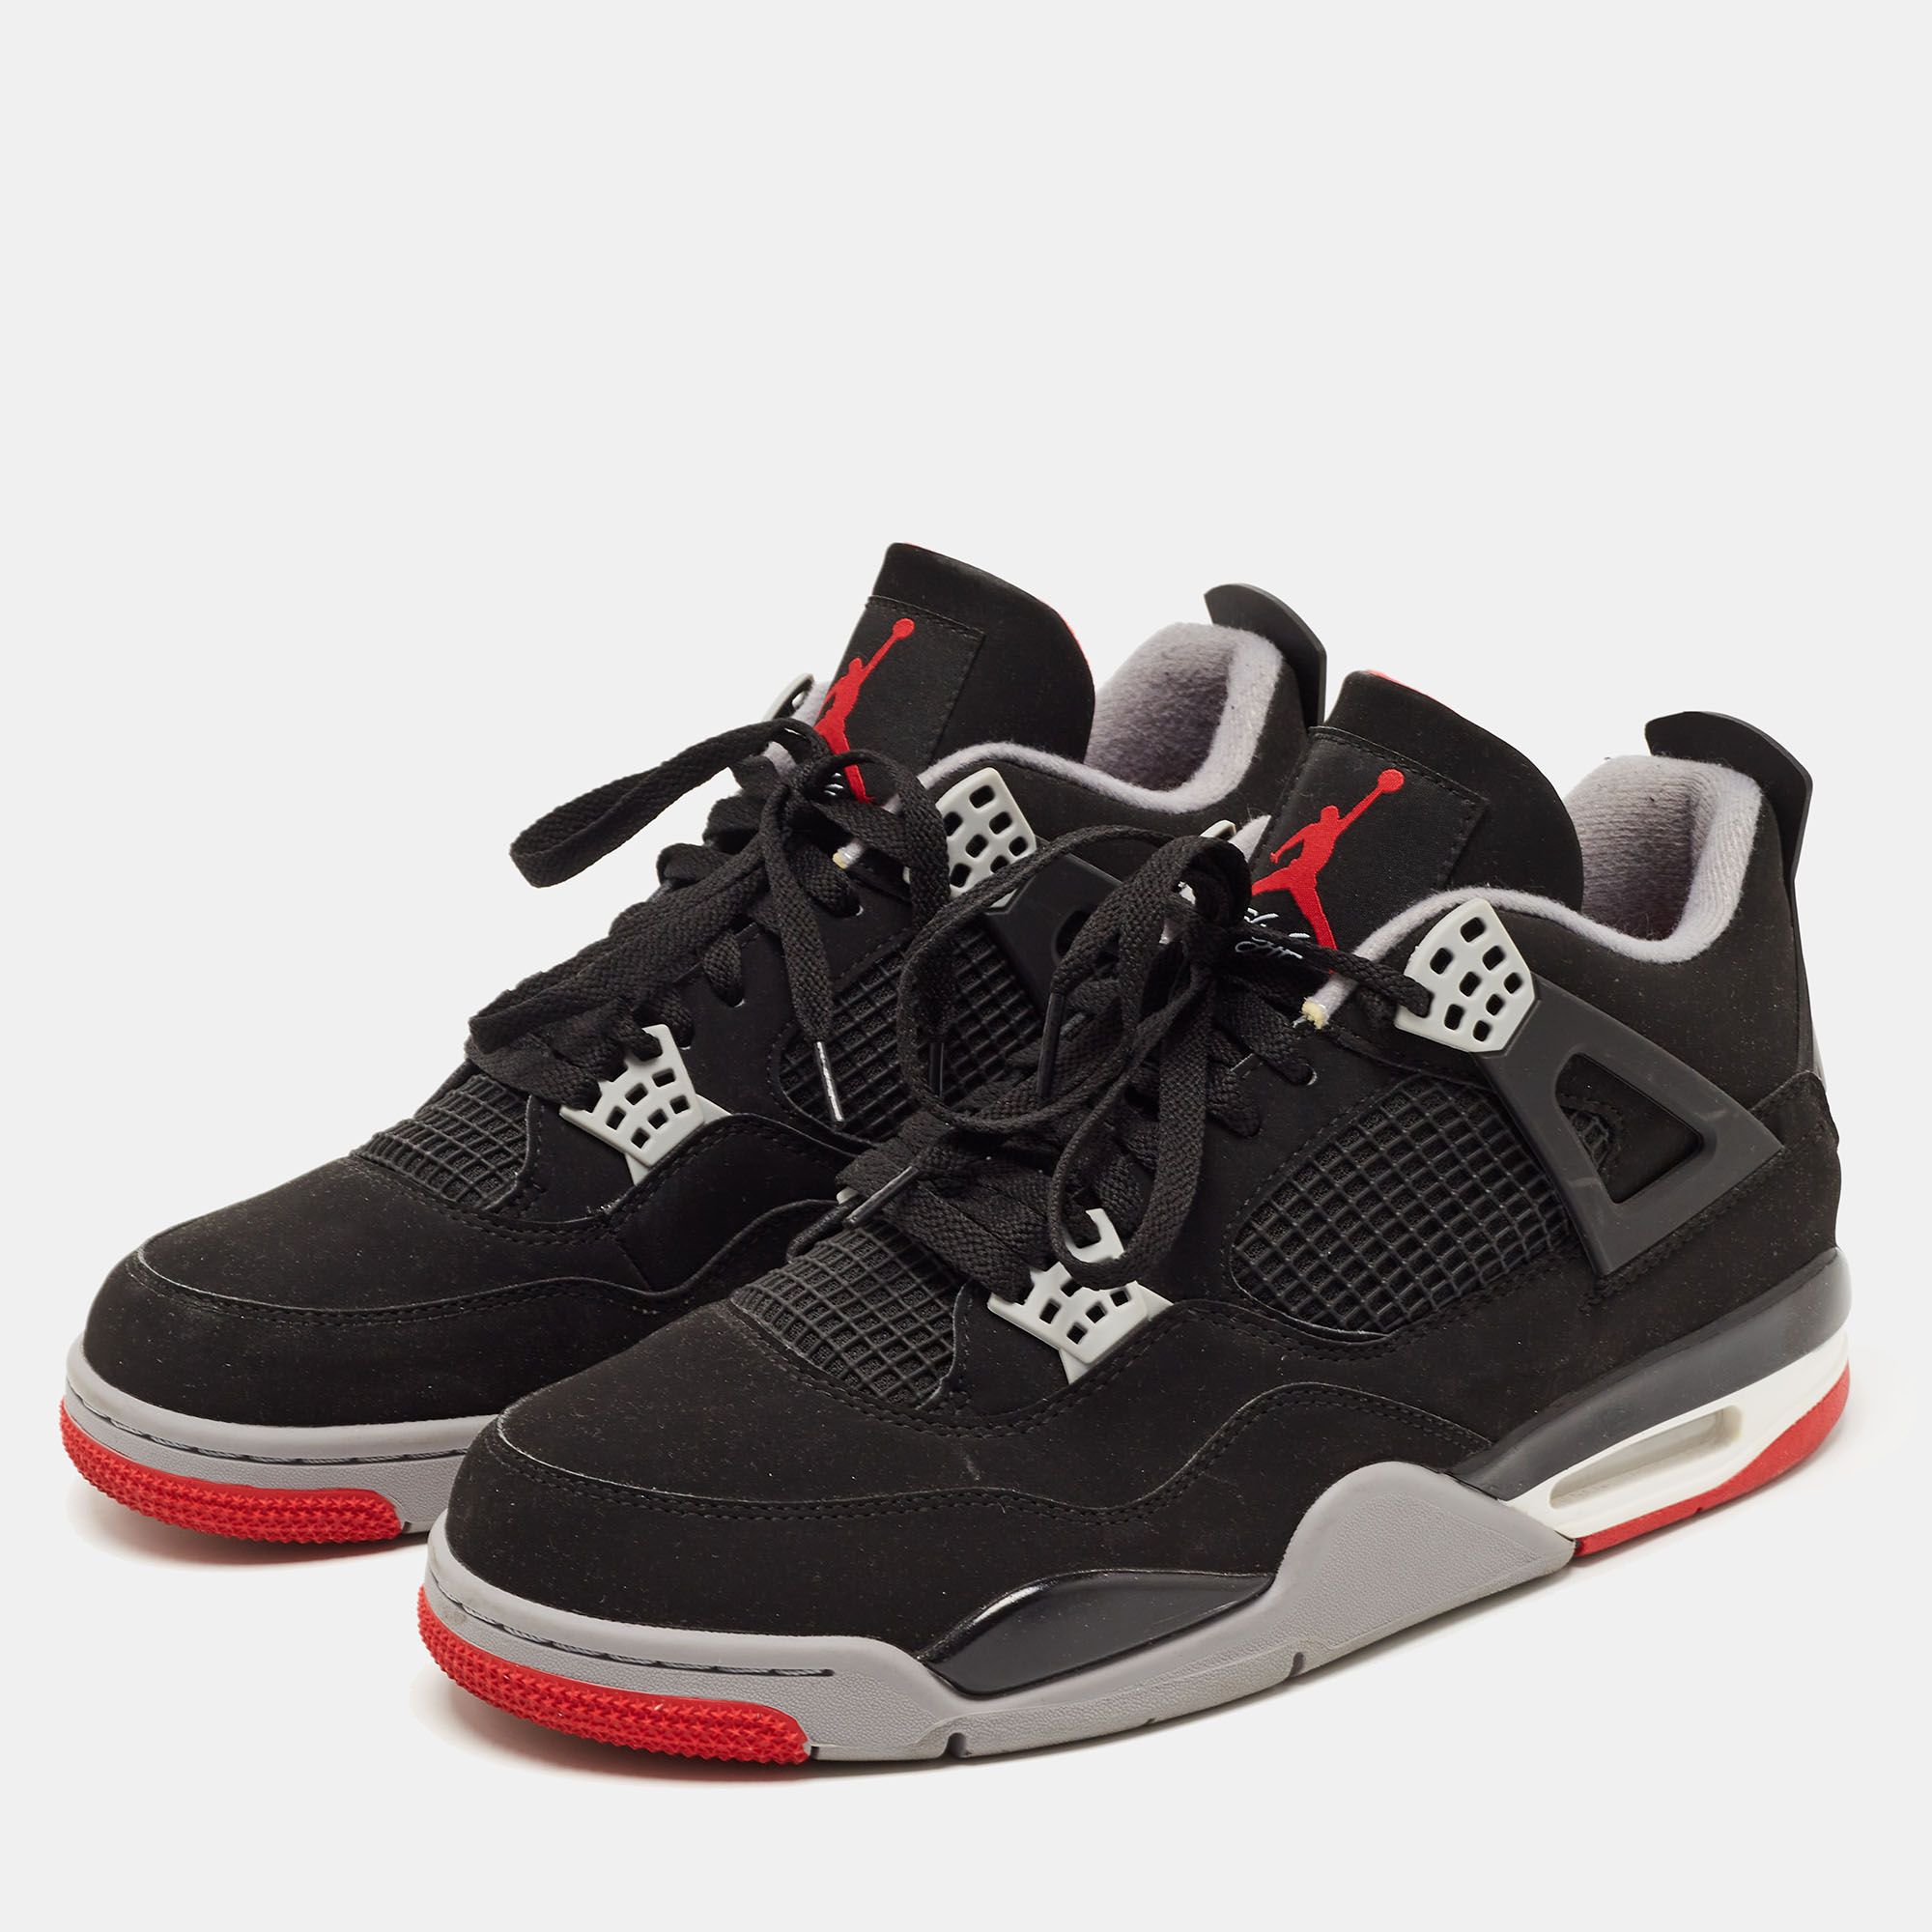 

Air Jordan Black Nubuck Leather Jordan 4 retro Sneakers Size